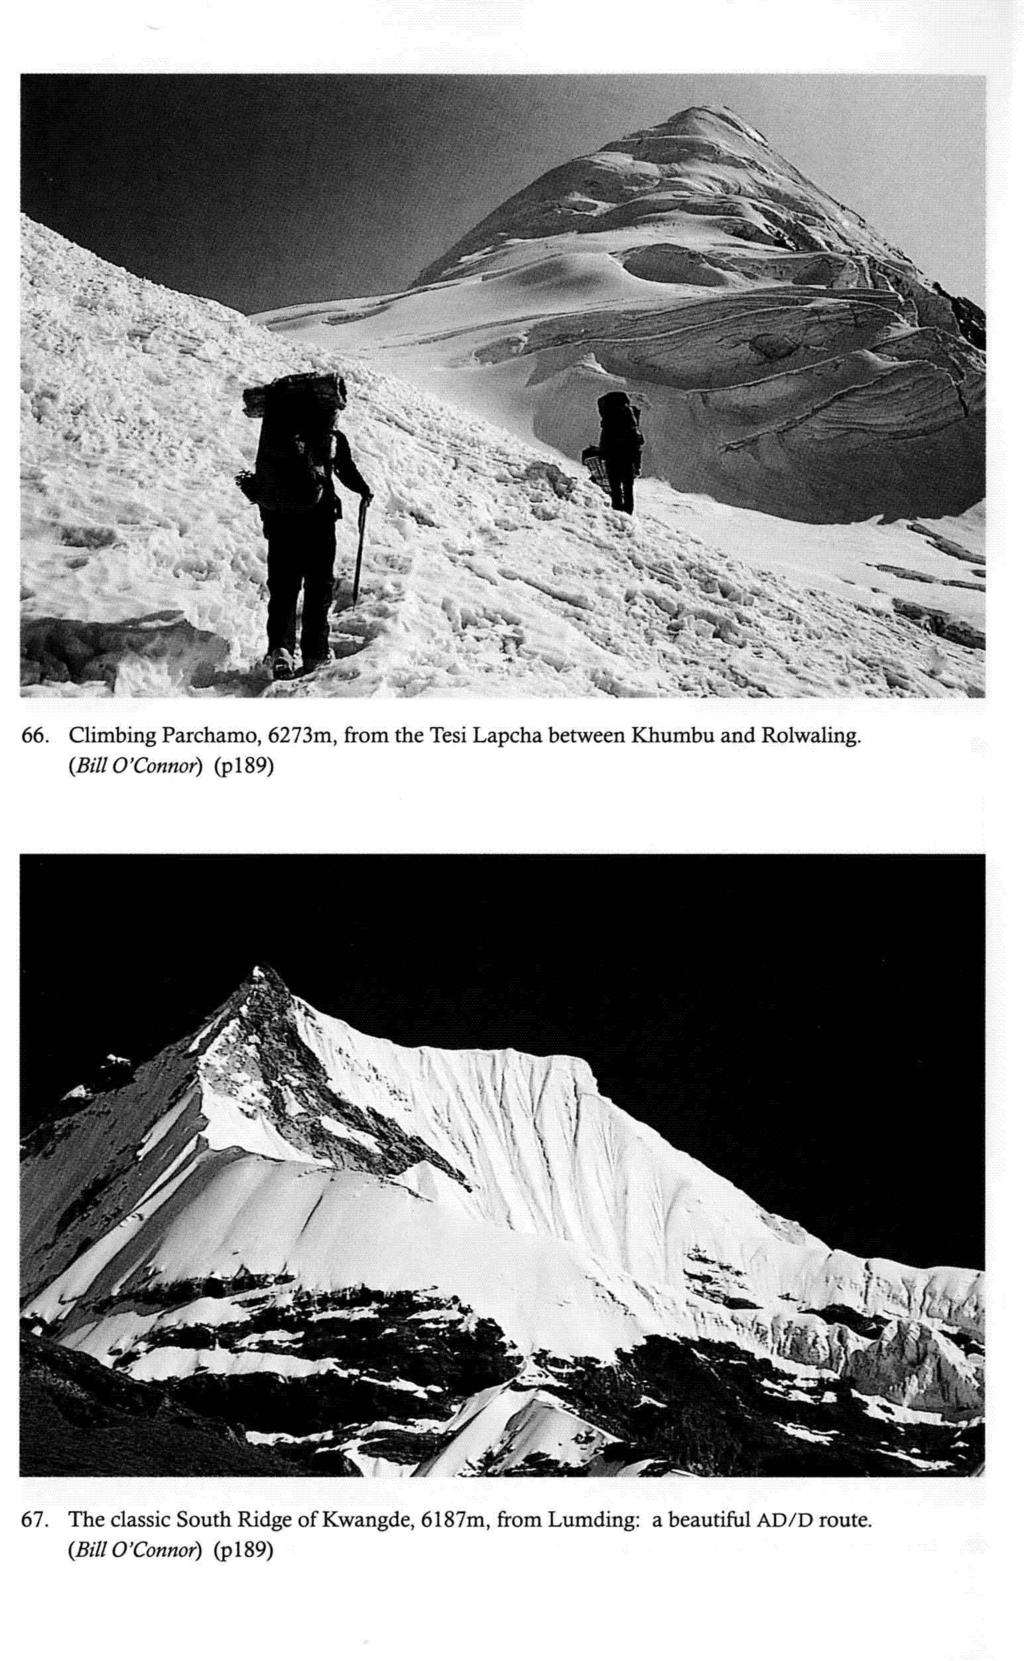 66. Climbing Parchamo, 6273m, from the Tesi Lapcha between Khumbu and Rolwaling.